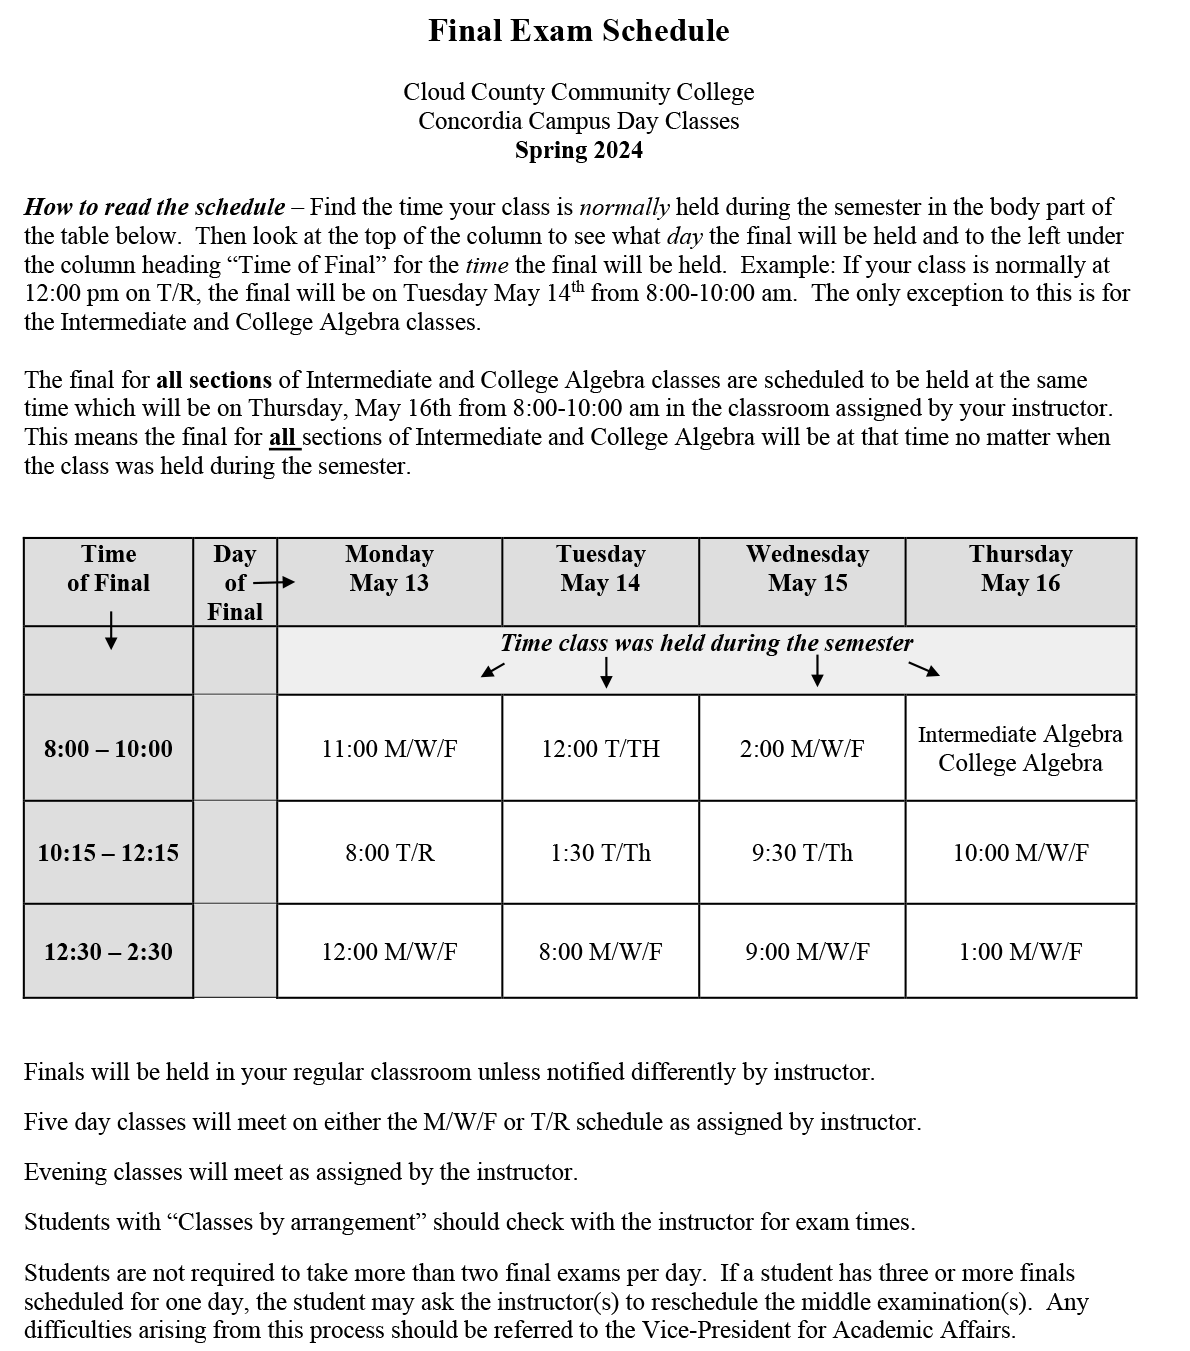 The Spring 2024 final exam schedule.